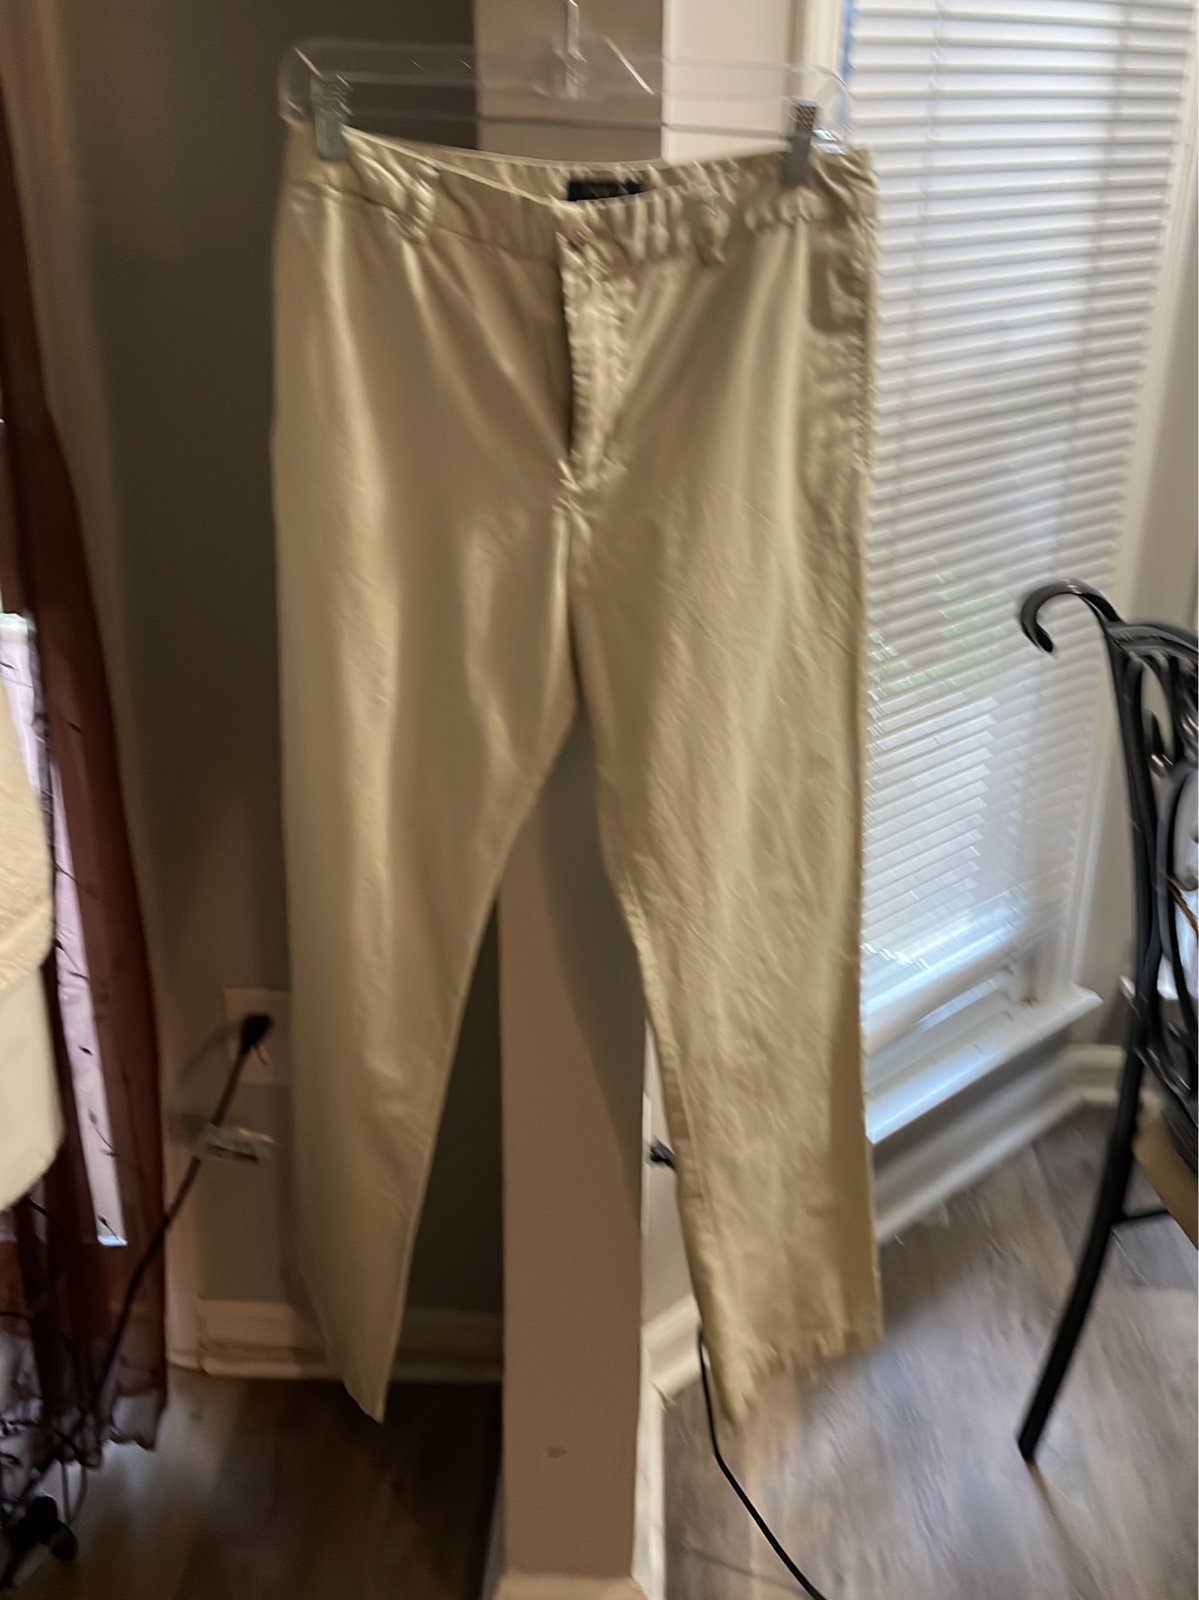 Fashion Ladies Ralph Lauren  pants, size 30 waist . IQ1